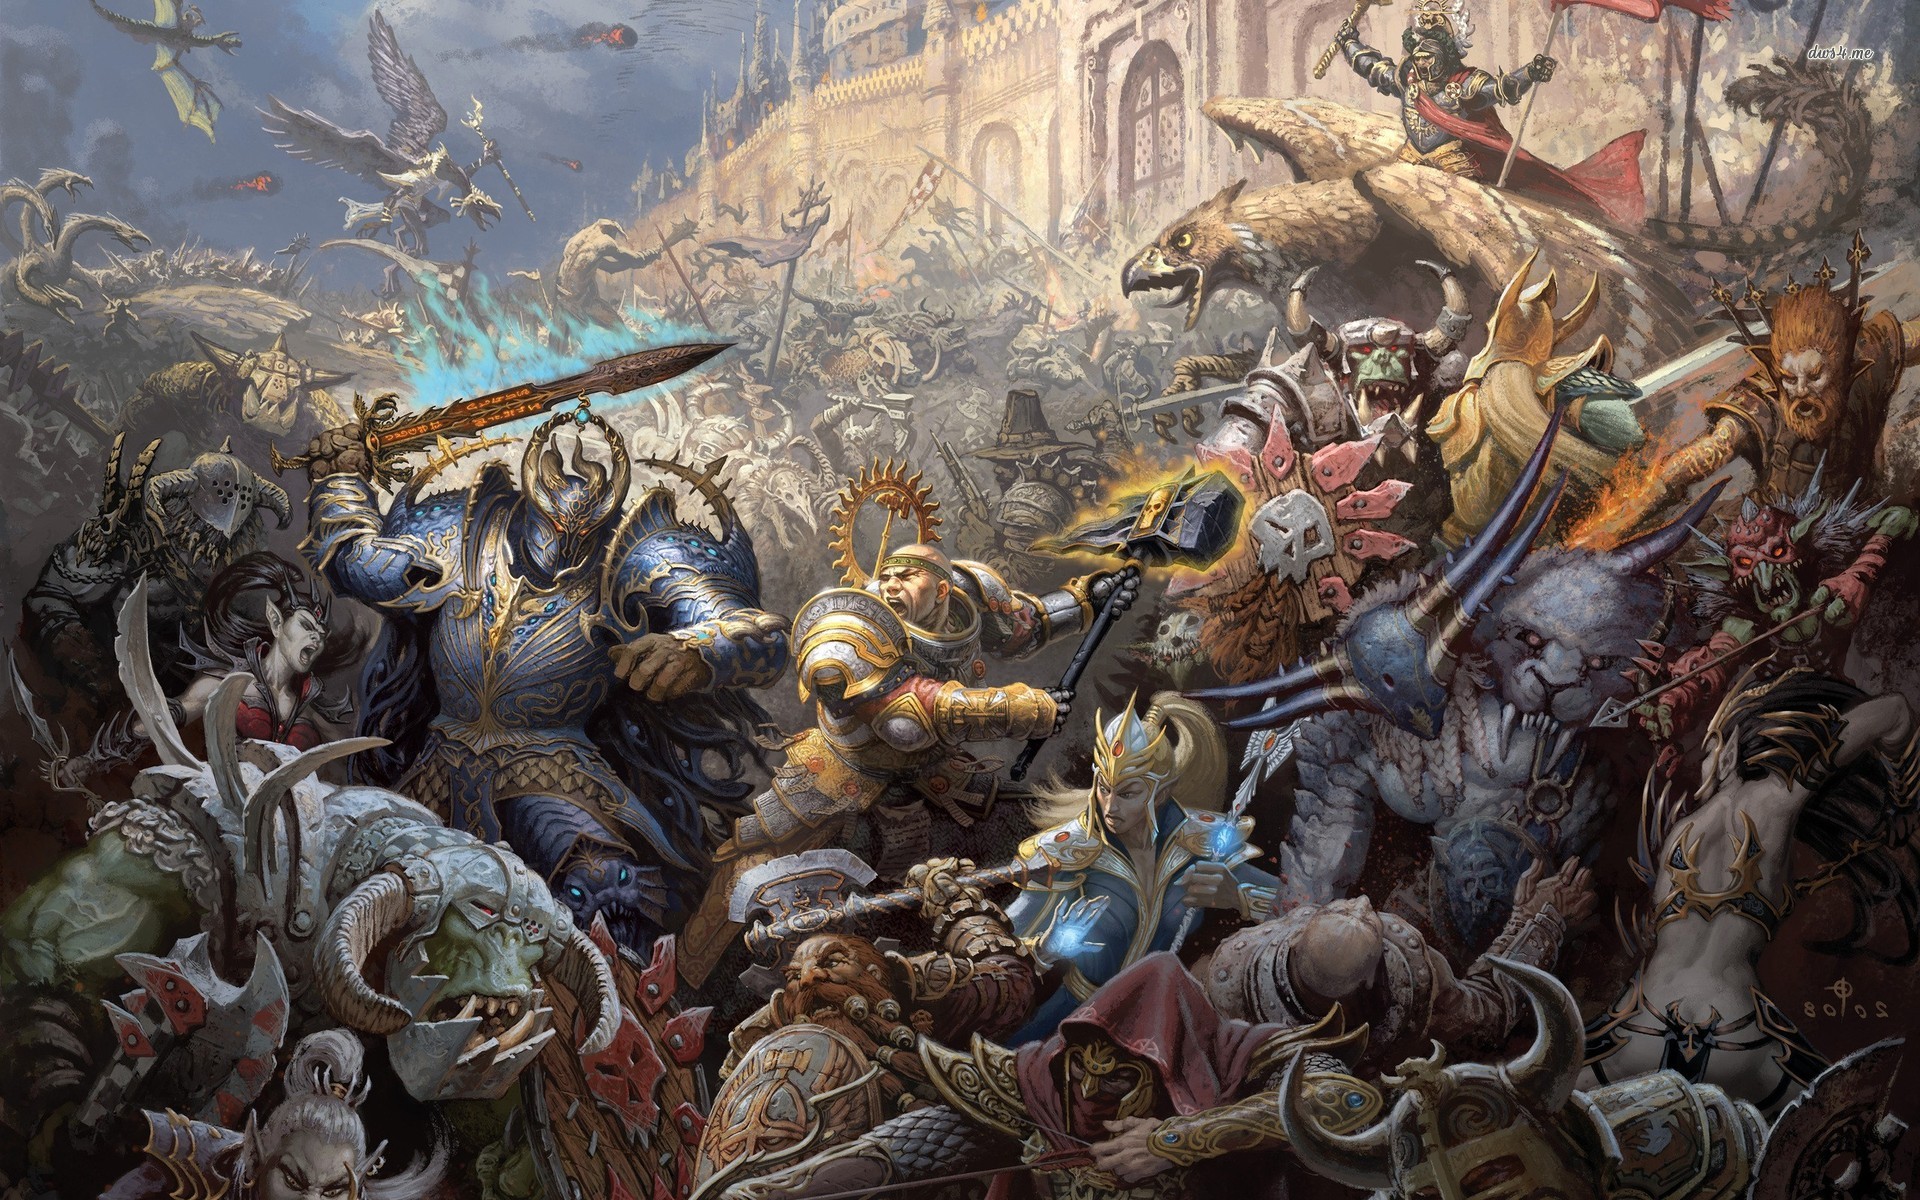 Warhammer Online Wallpaper Pictures Image